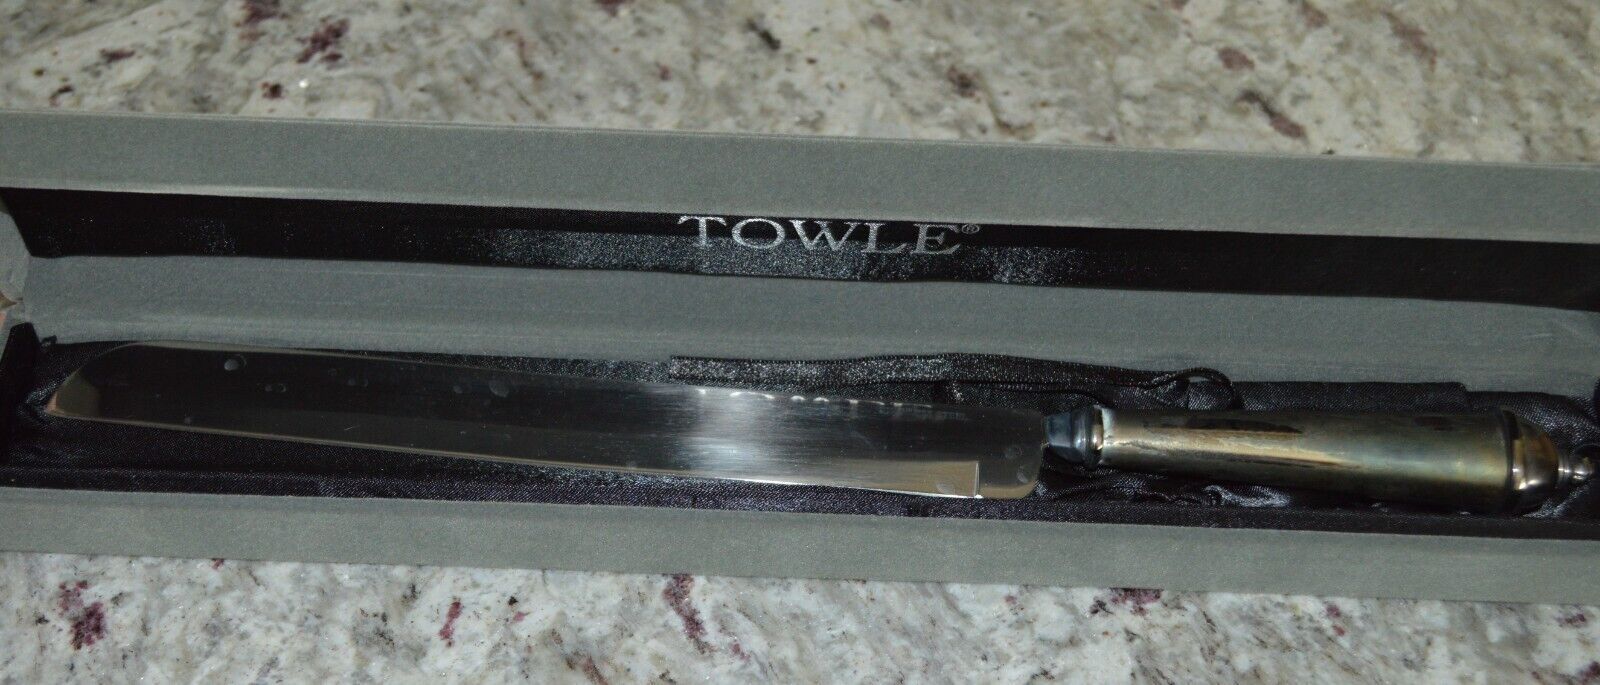 Towle Copenhagen Stainless Steel Bridal Wedding Cake Knife Boxed - $17.99